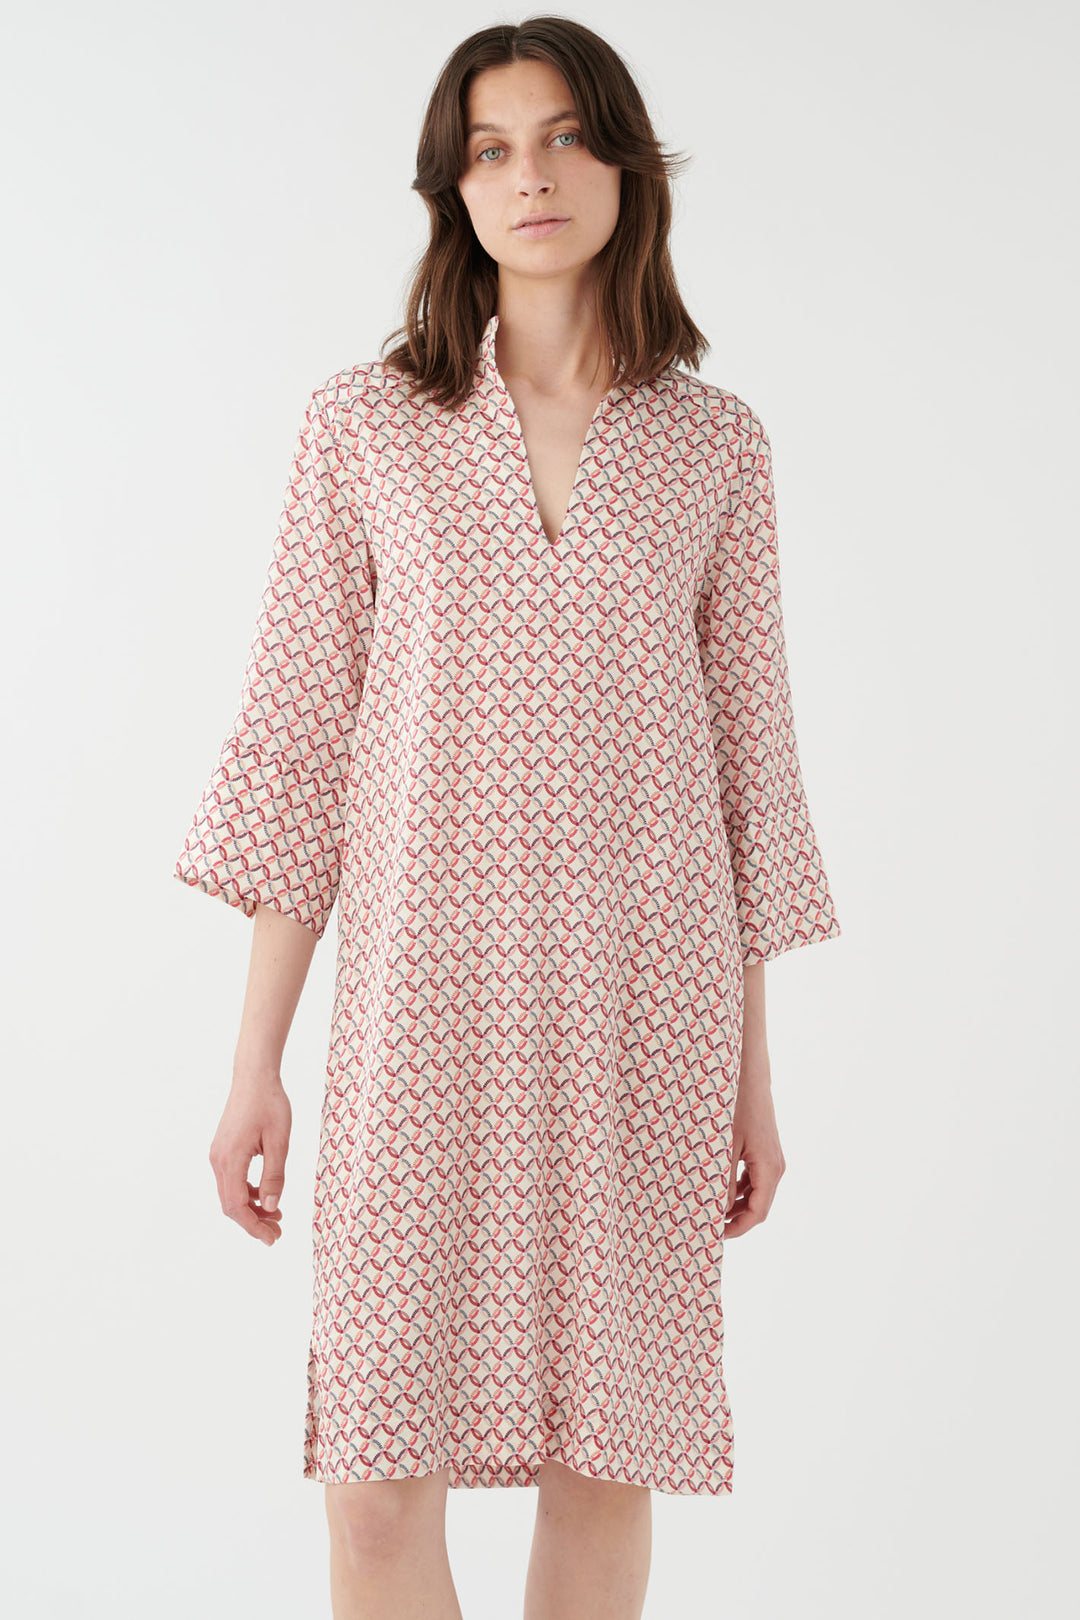 Dea Kudibal Sibel 1330124 5742 Ray Pink Print V-Neck Dress With Sleeves - Olivia Grace Fashion